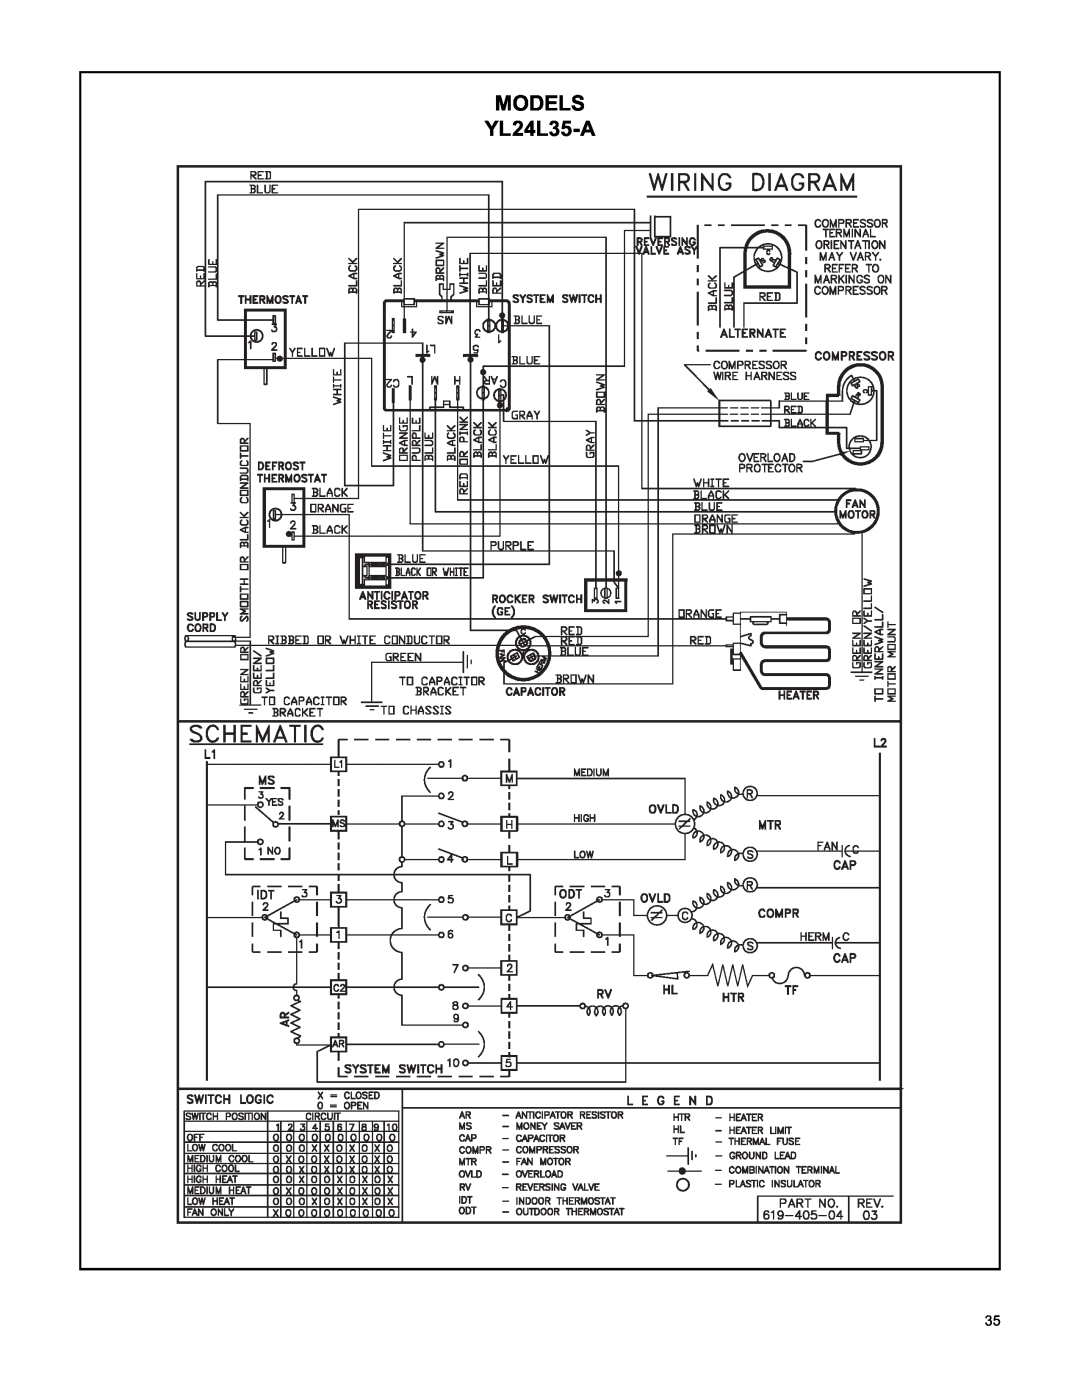 Friedrich RAC-SVC-06 service manual YL24L35-A, Models 